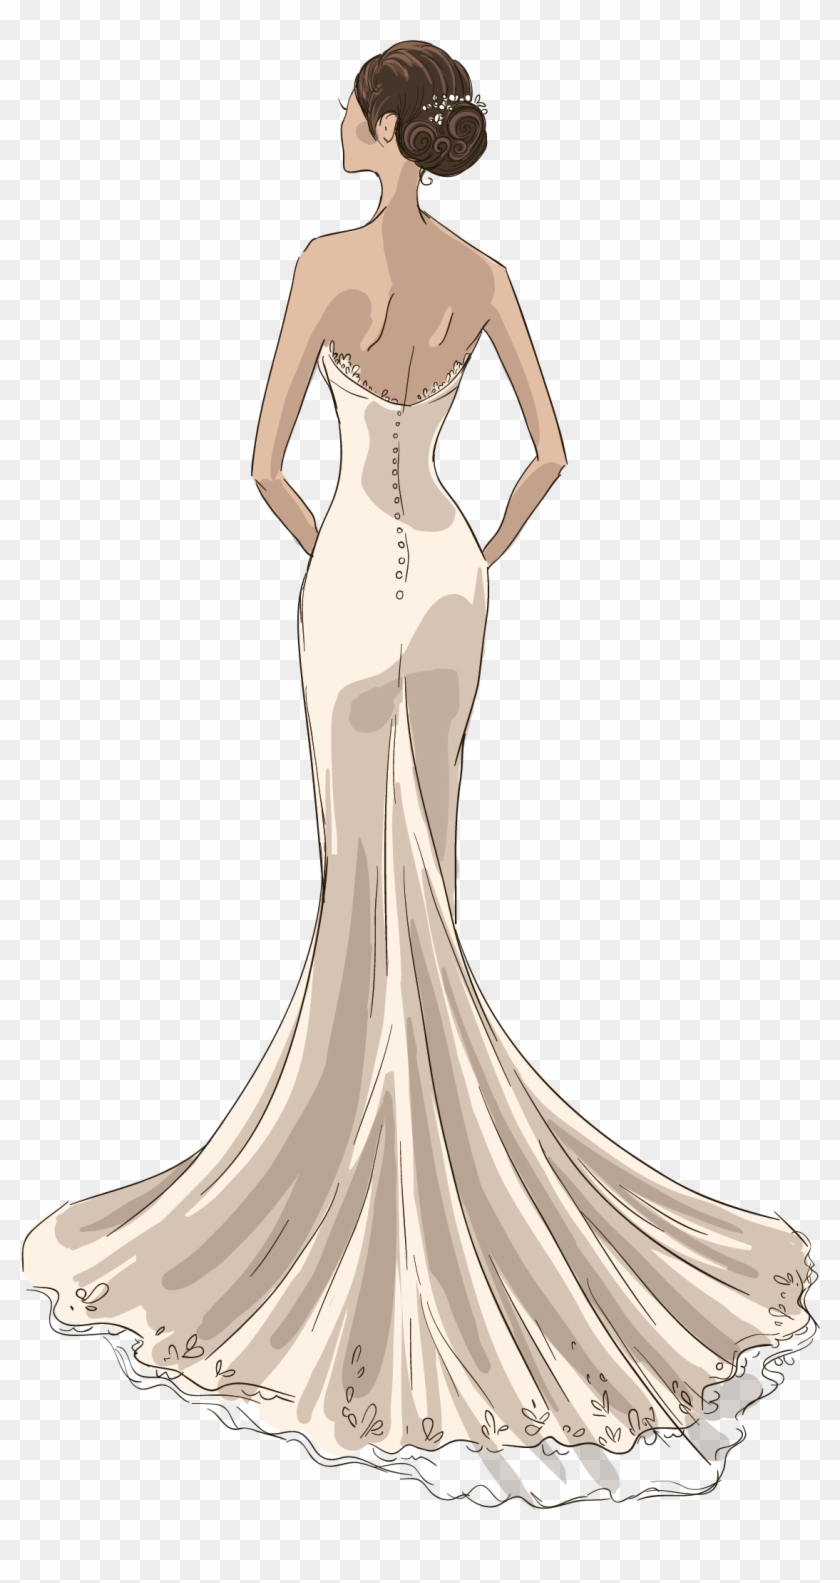 Wedding Dress Drawing Model - Wedding Dress - Free Transparent PNG ...